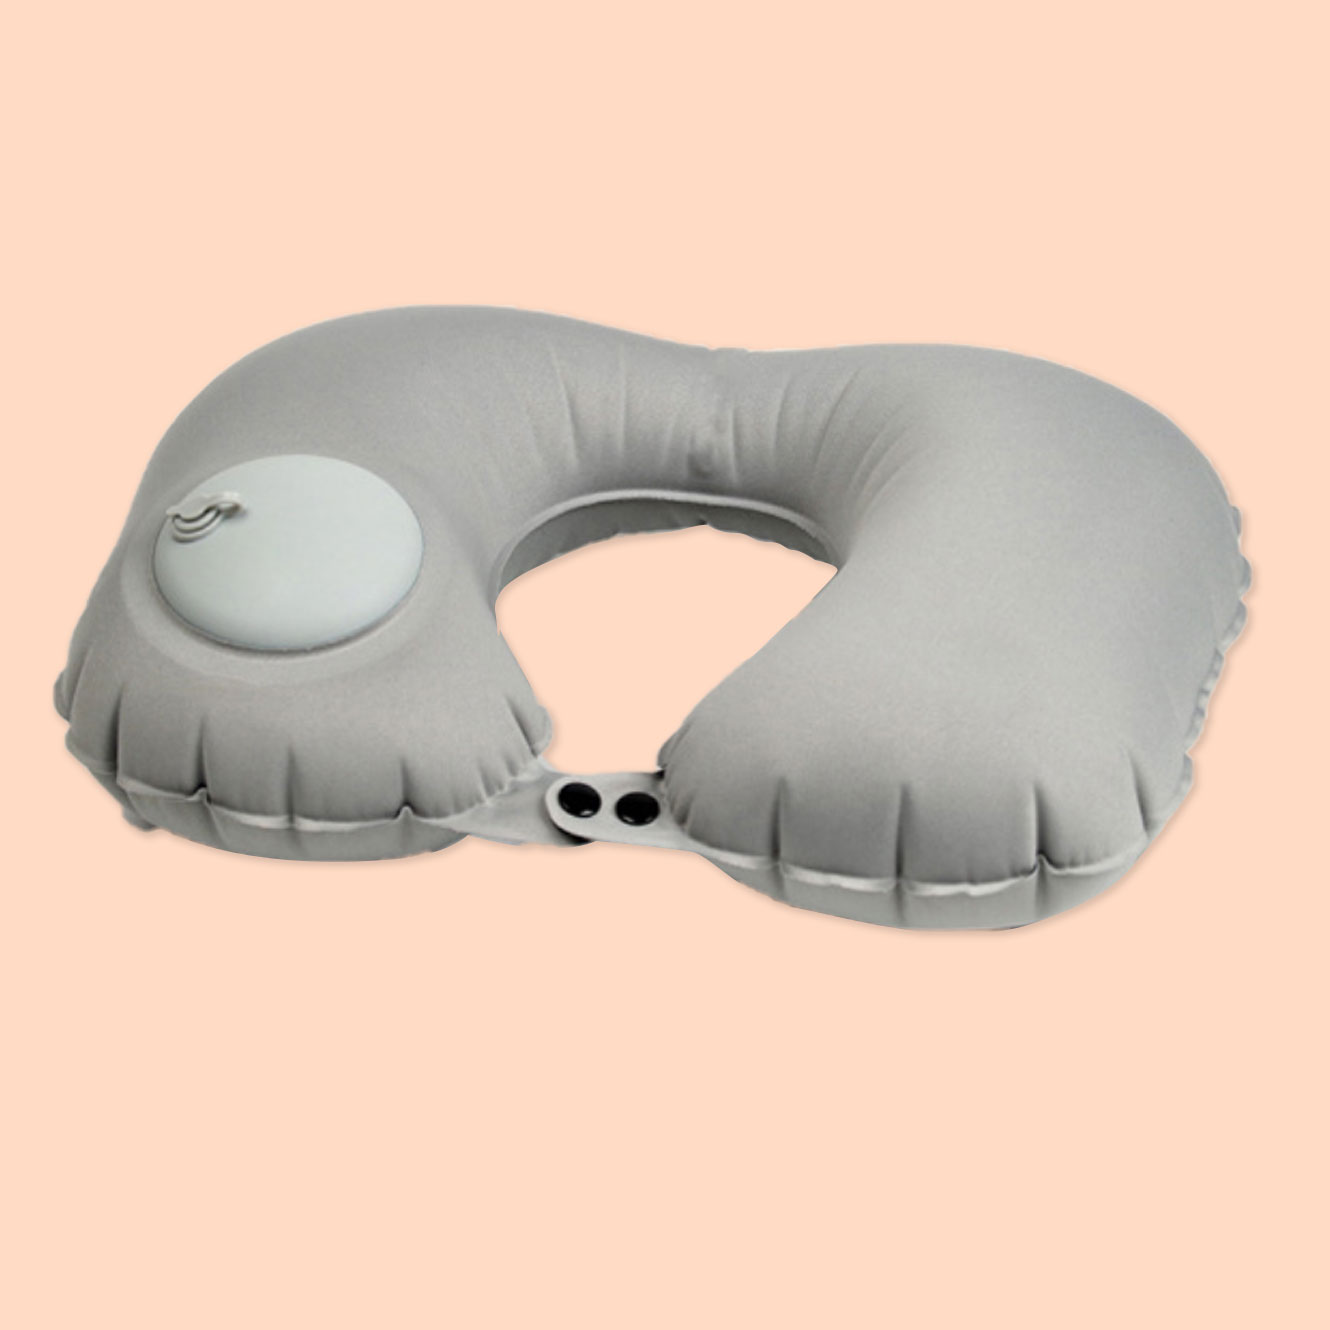 https://bigbanner.com.au/wp-content/uploads/2020/02/Inflatable-U-shape-Neck-Pillow-3.jpg